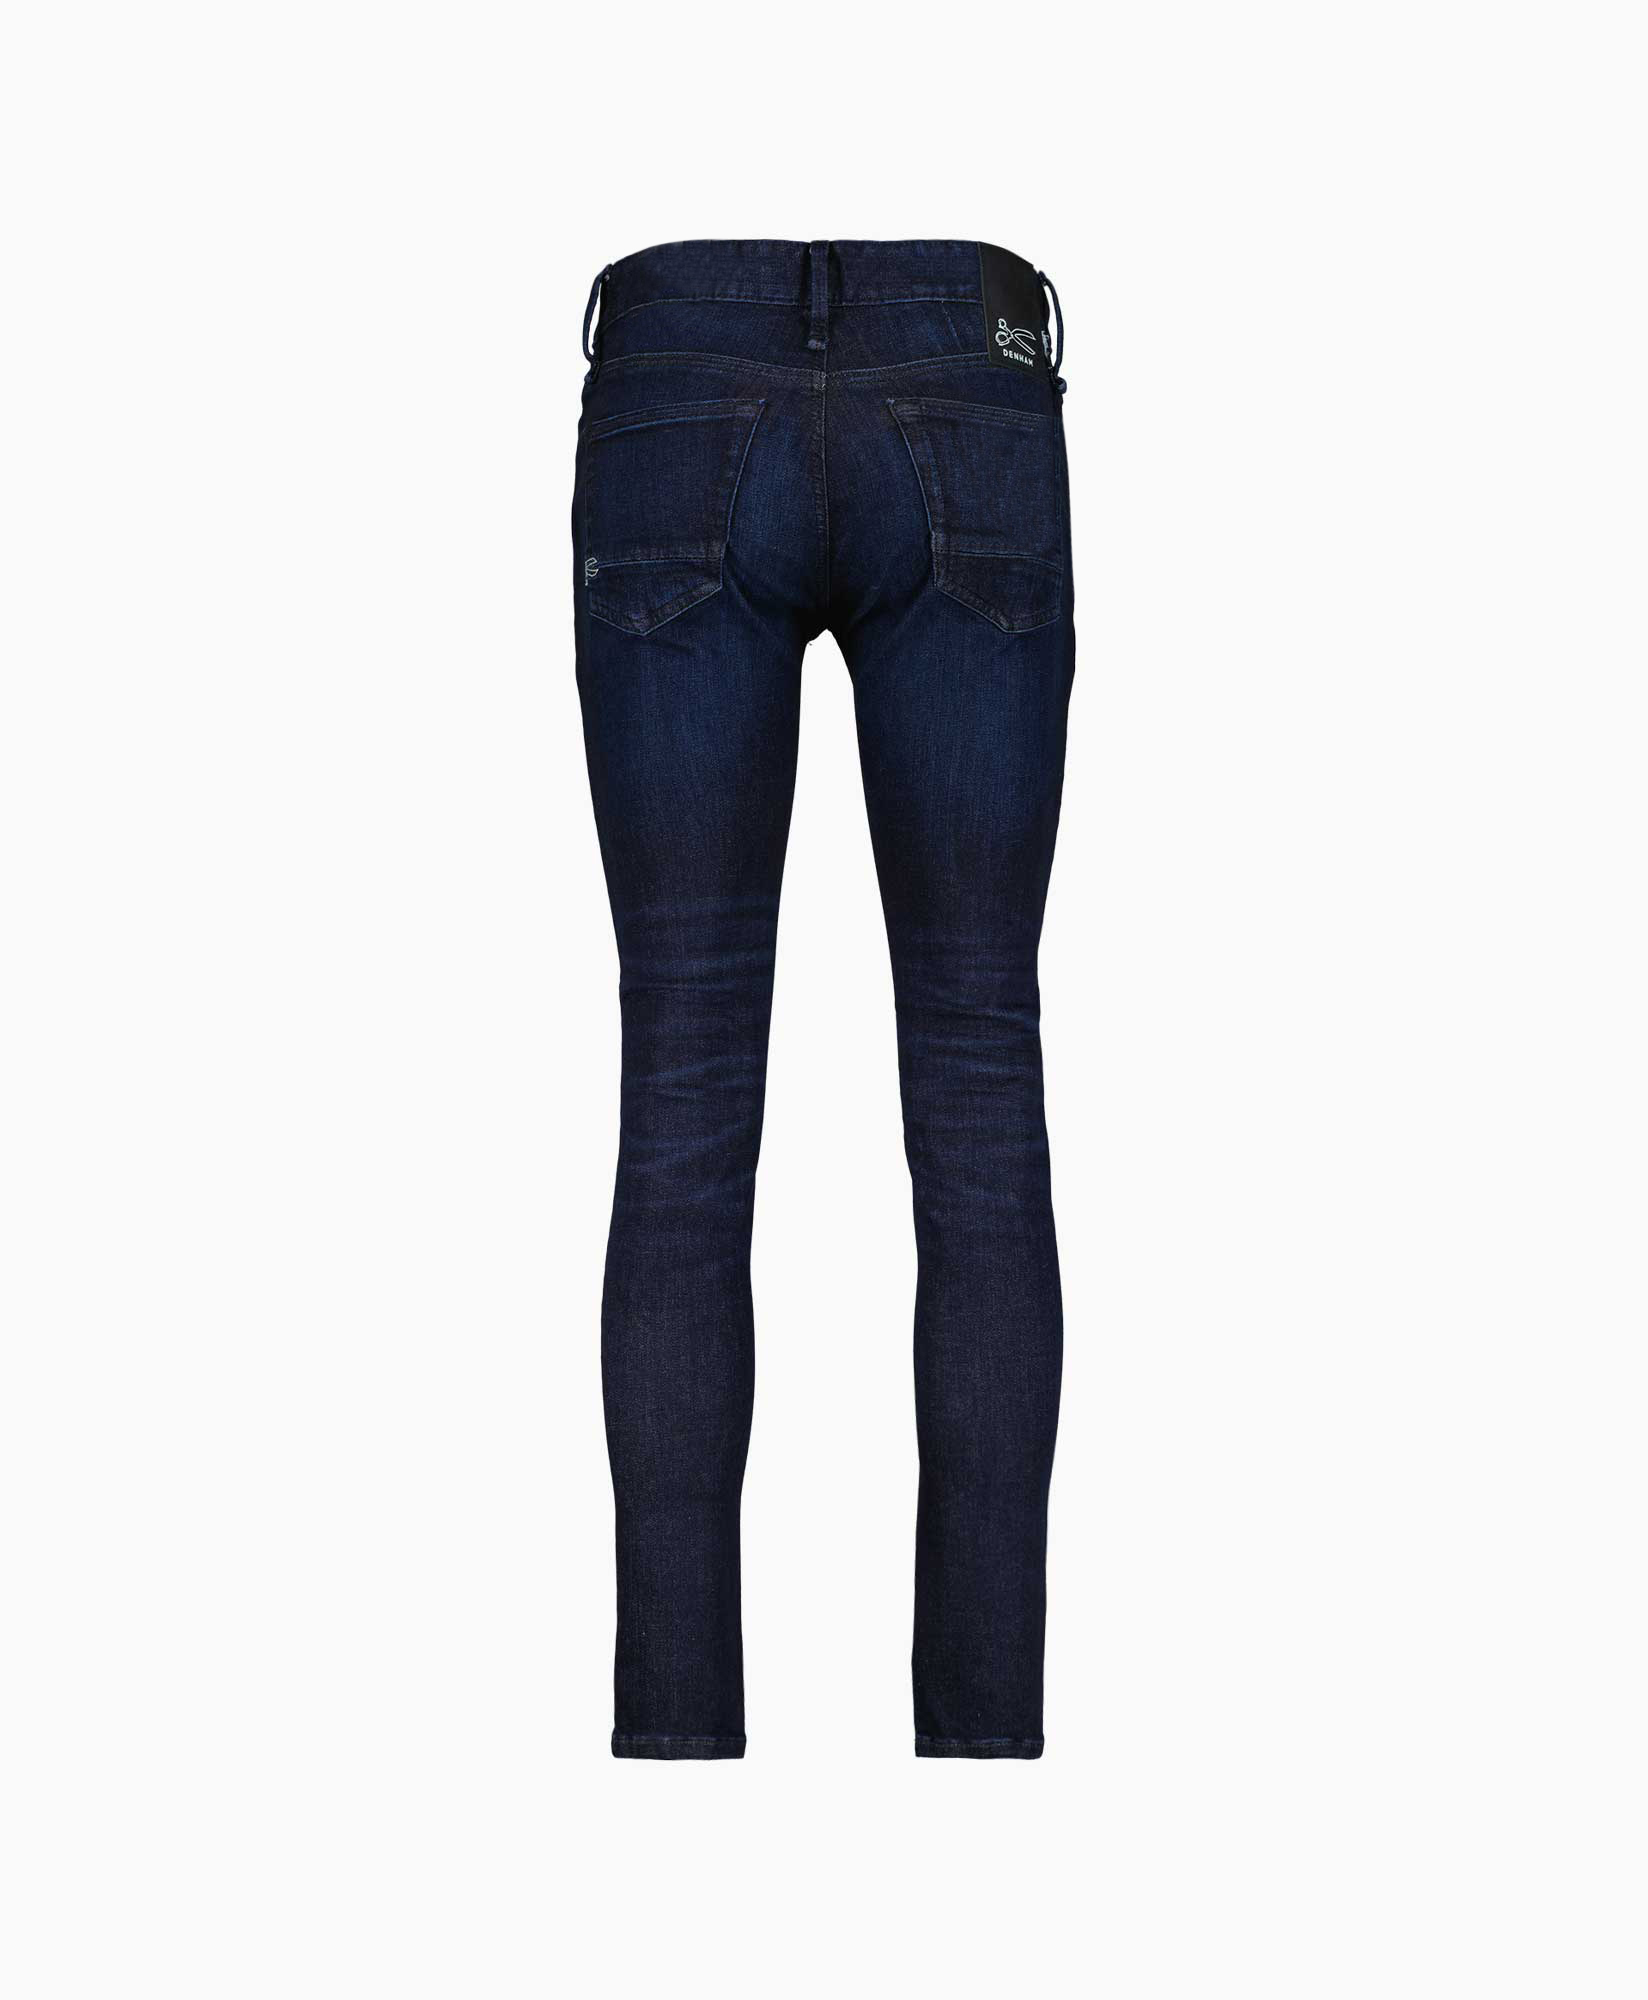 Denham Heren | Jeans | 01-21-08-11-002 Blauw